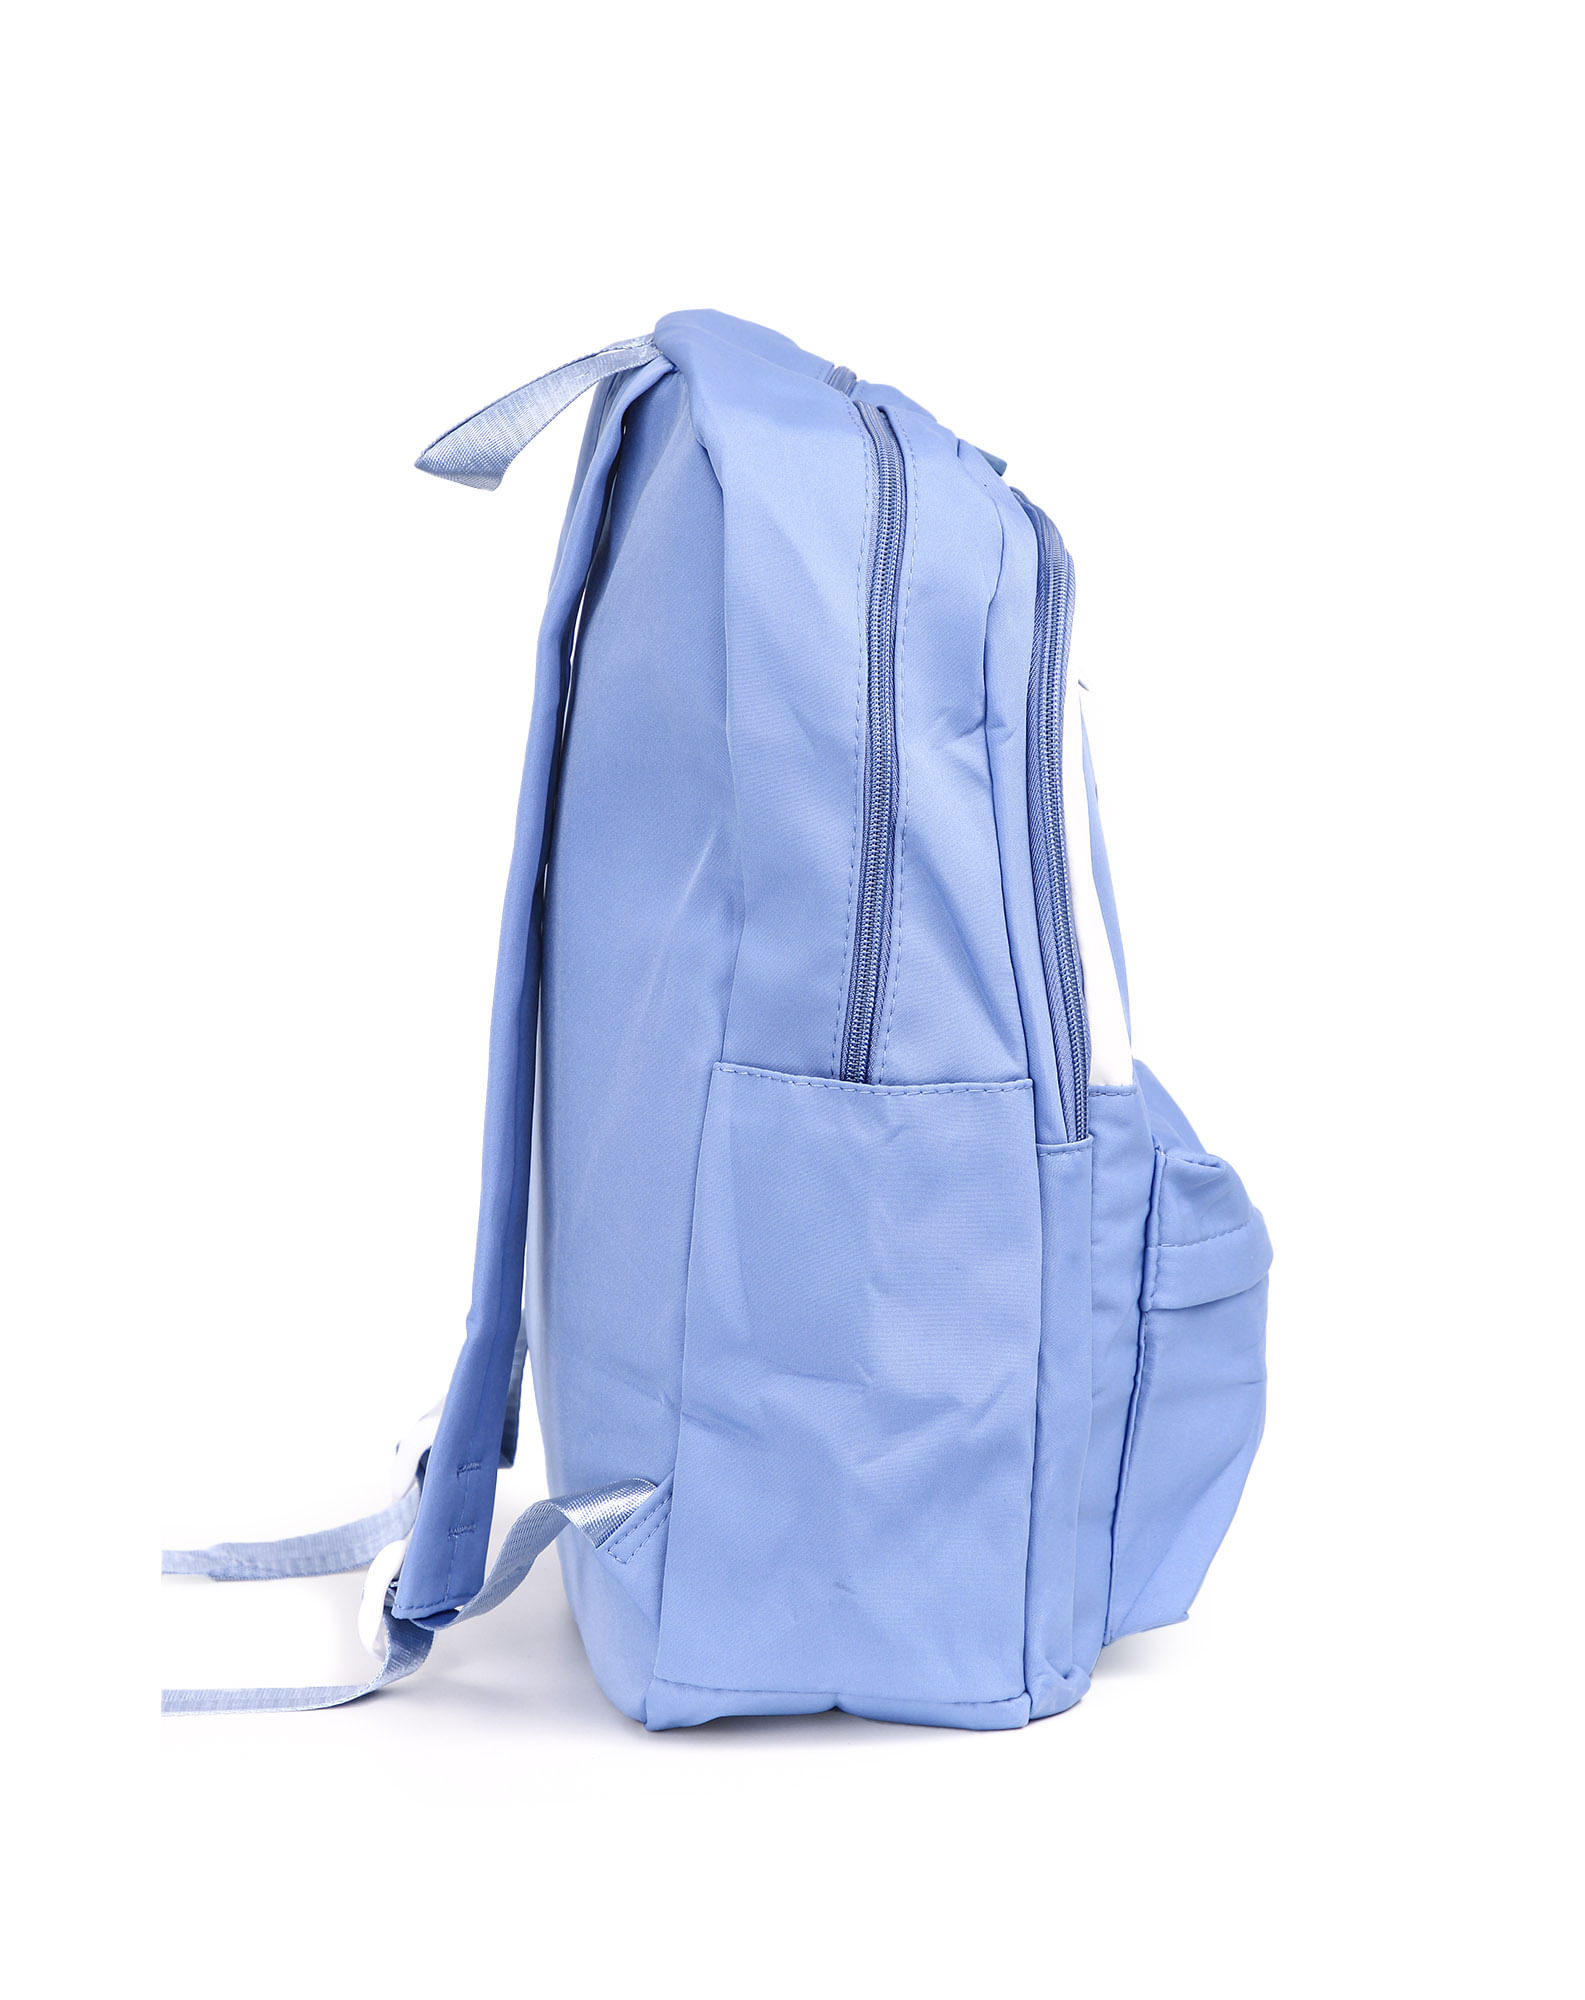 701421001 mochila de costas feminina nylon + chaveiro azul u 2df